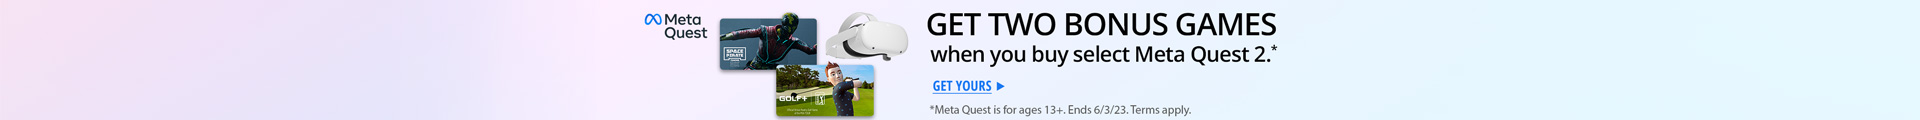 Get two Bonus Games when you buy select Meta Quest 2